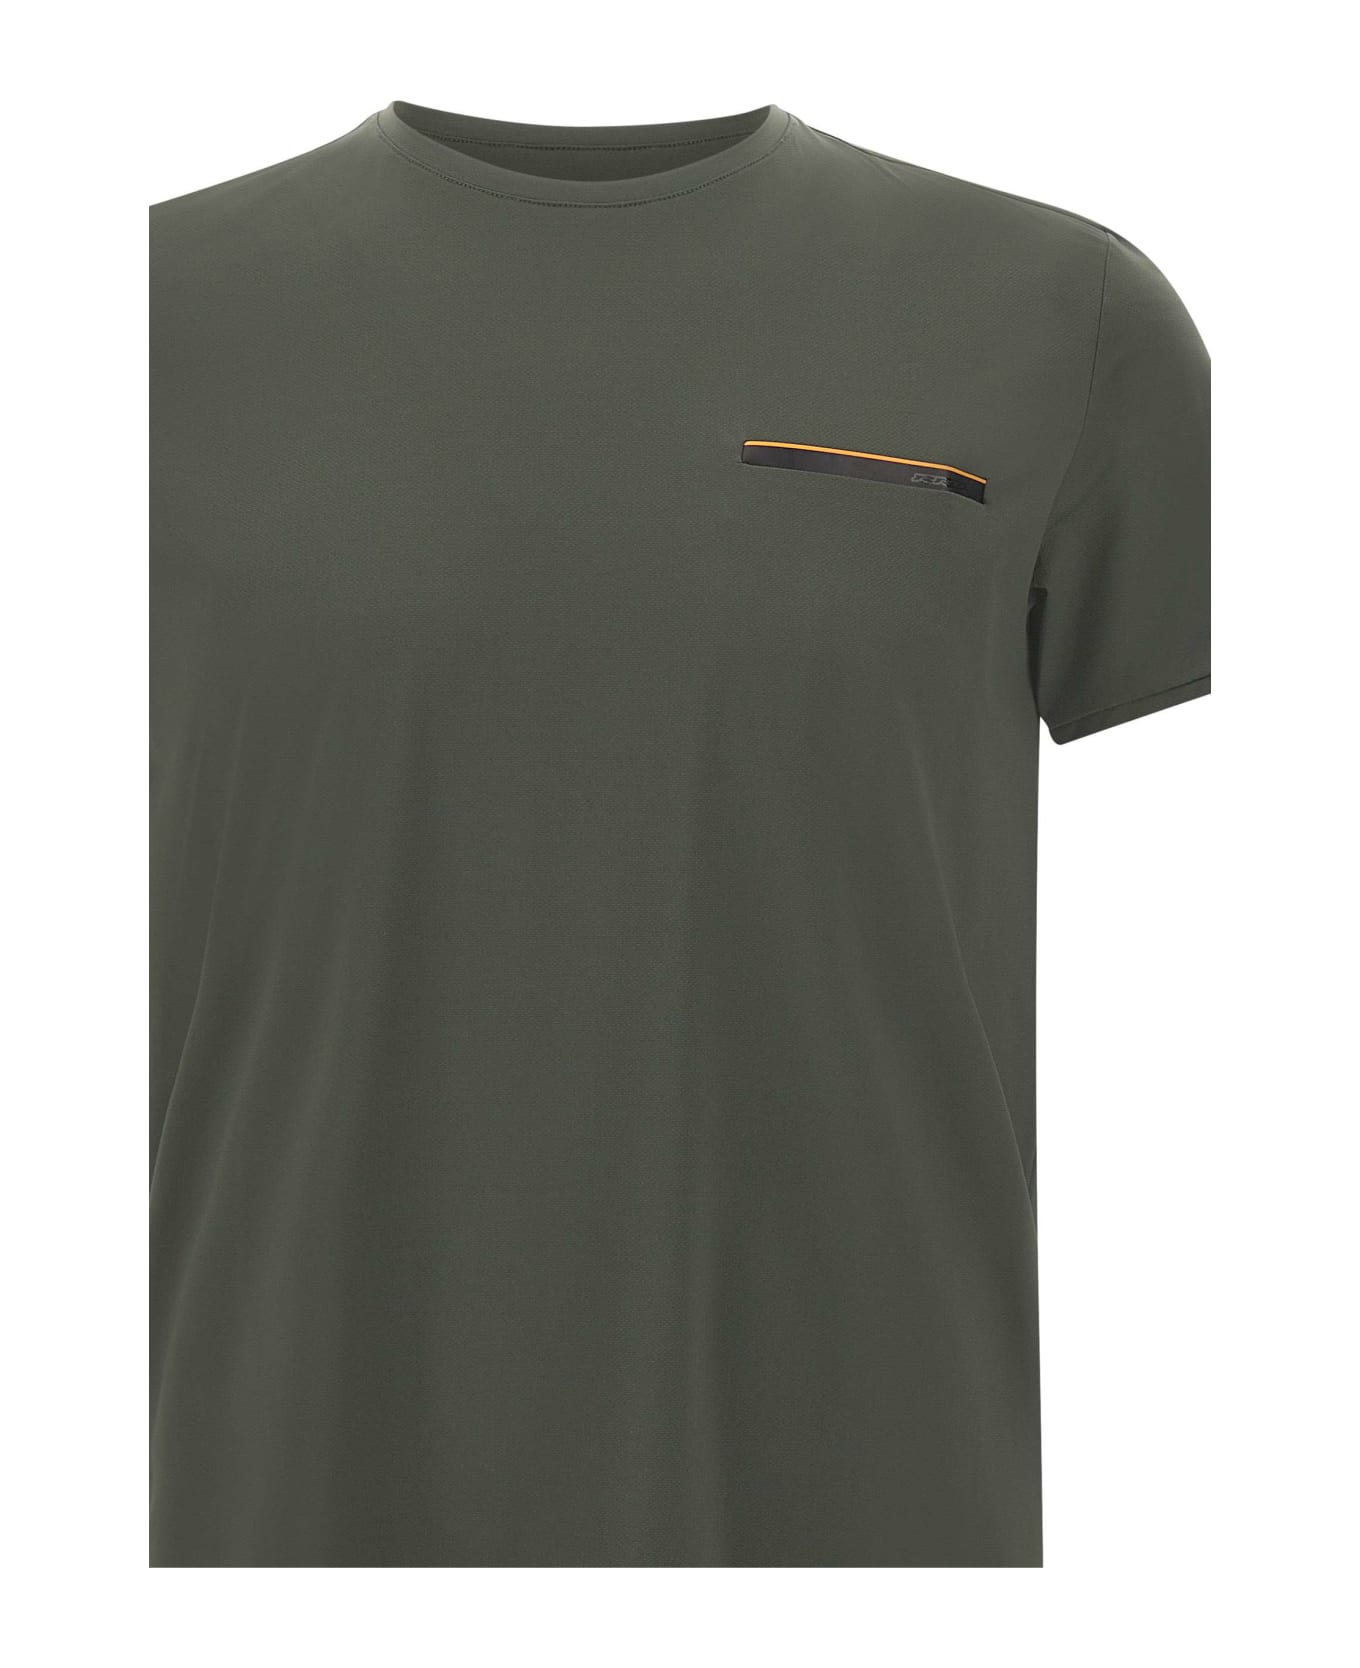 RRD - Roberto Ricci Design 'oxford Pocket Shirty' T-shirt - Bosco